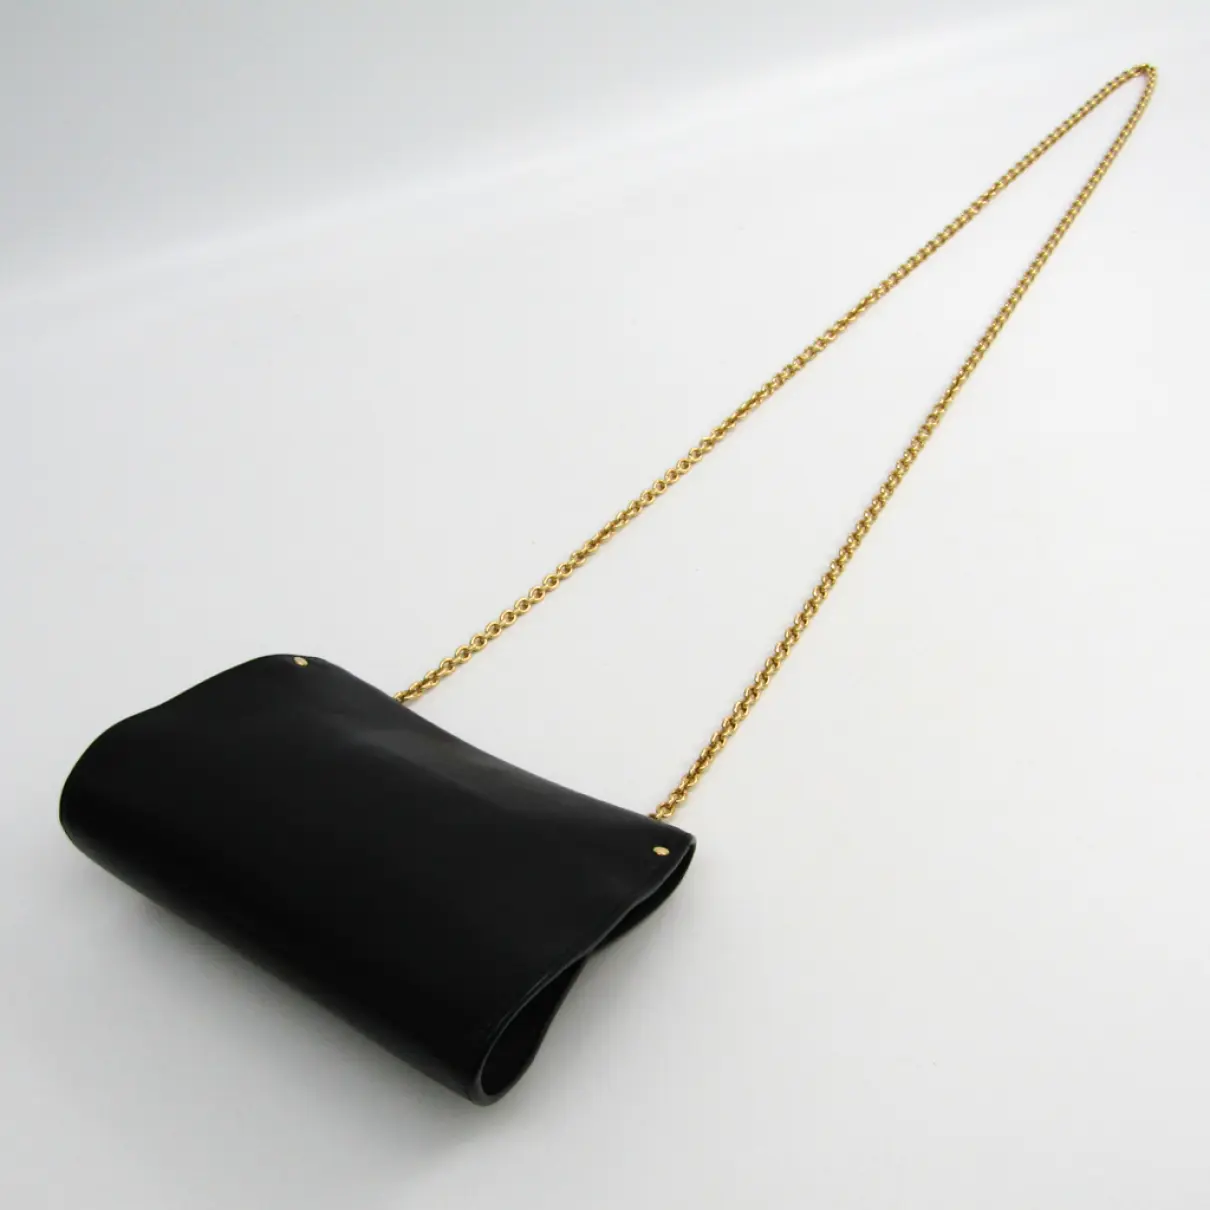 Buy Salvatore Ferragamo Leather crossbody bag online